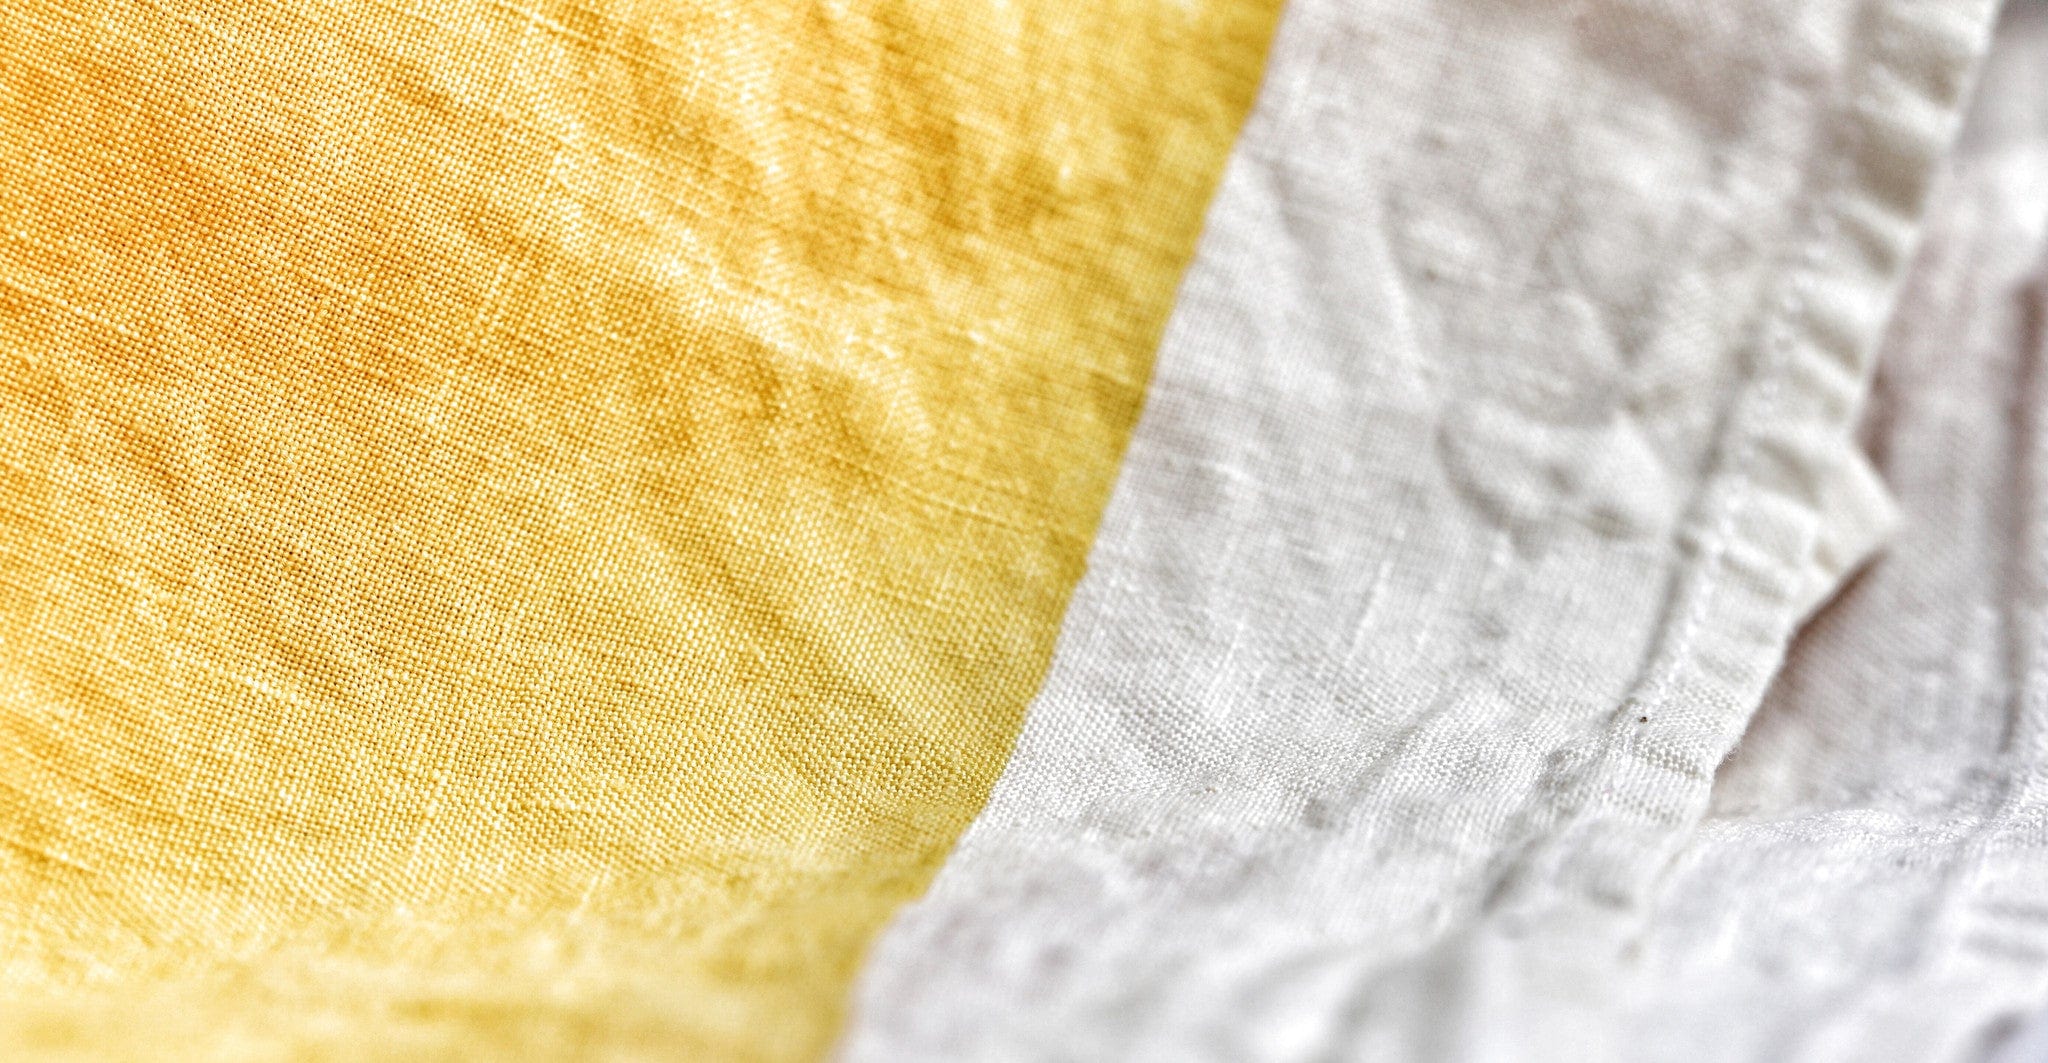 Full Field Linen Napkin in Lemon Yellow, 50x50cm